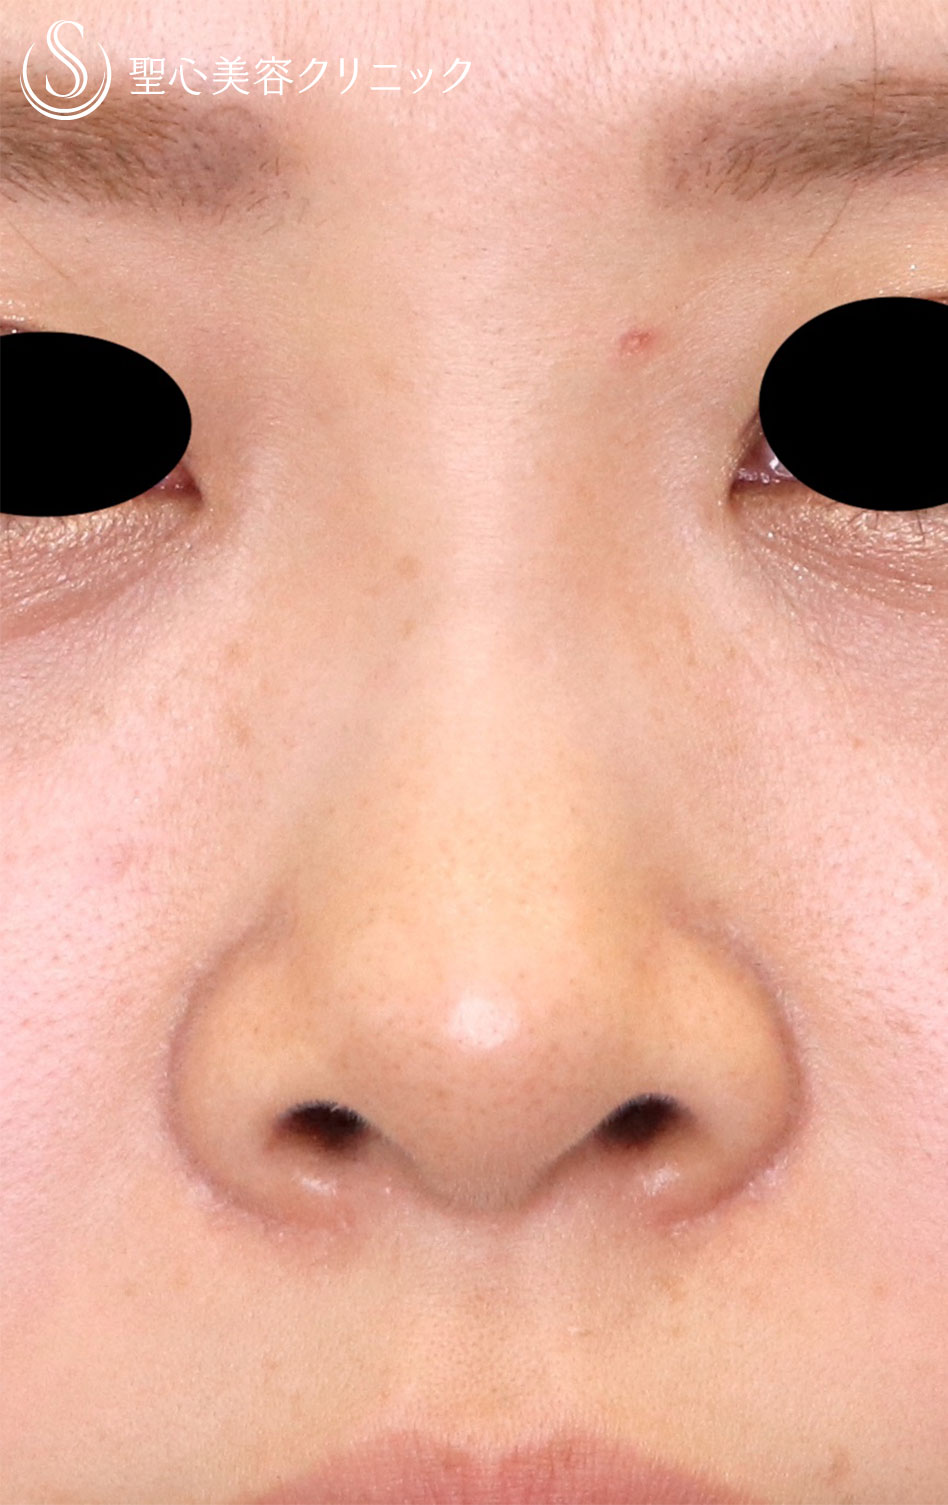 3Dオーダーメイドプロテーゼ隆鼻術+鼻尖形成（耳介軟骨移植））_Before